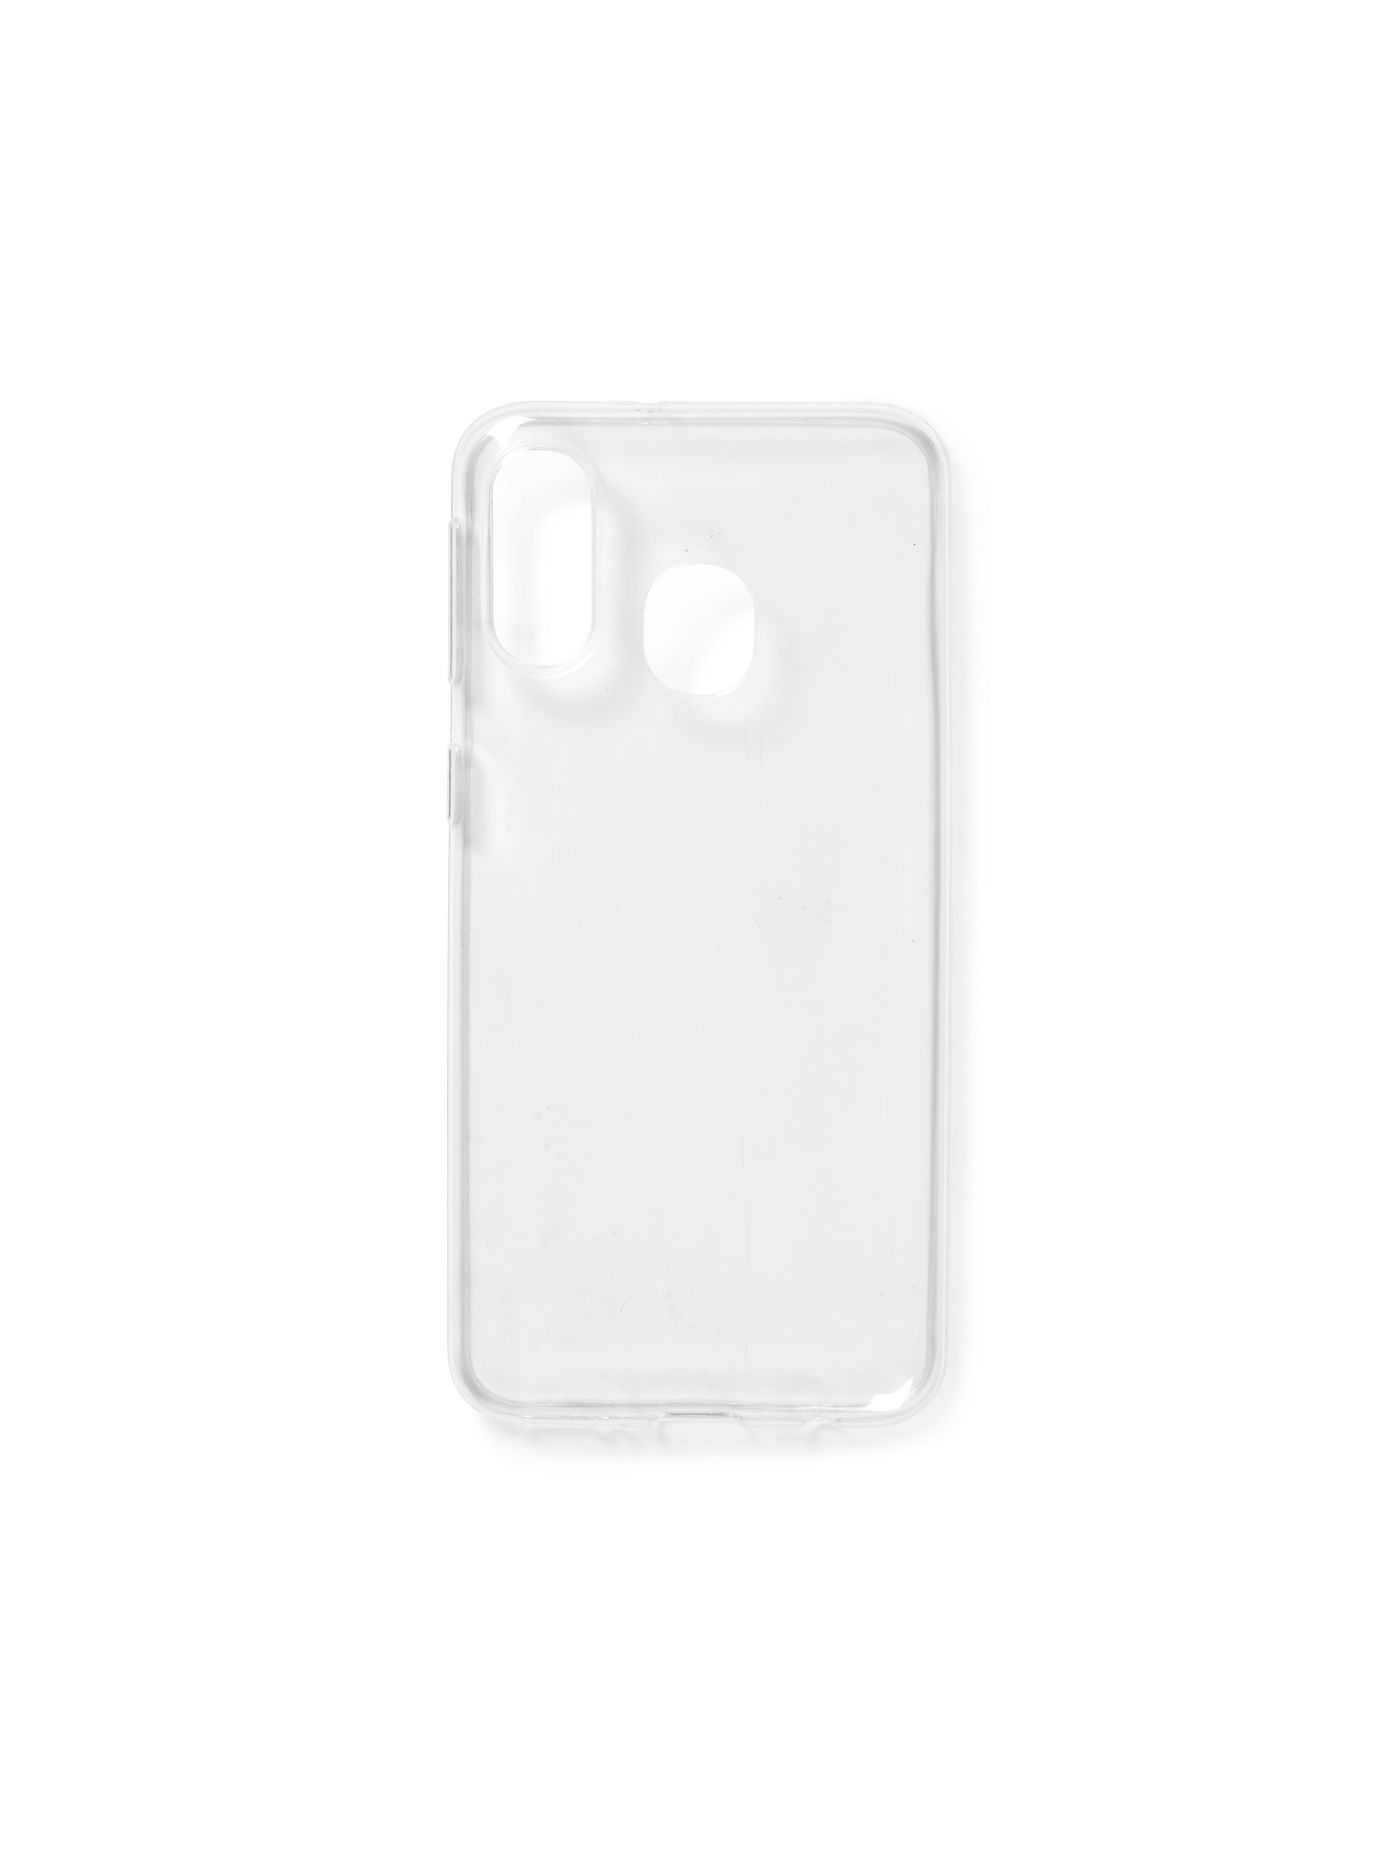 Samsung A40 Soft Case Clear Ultra-slim